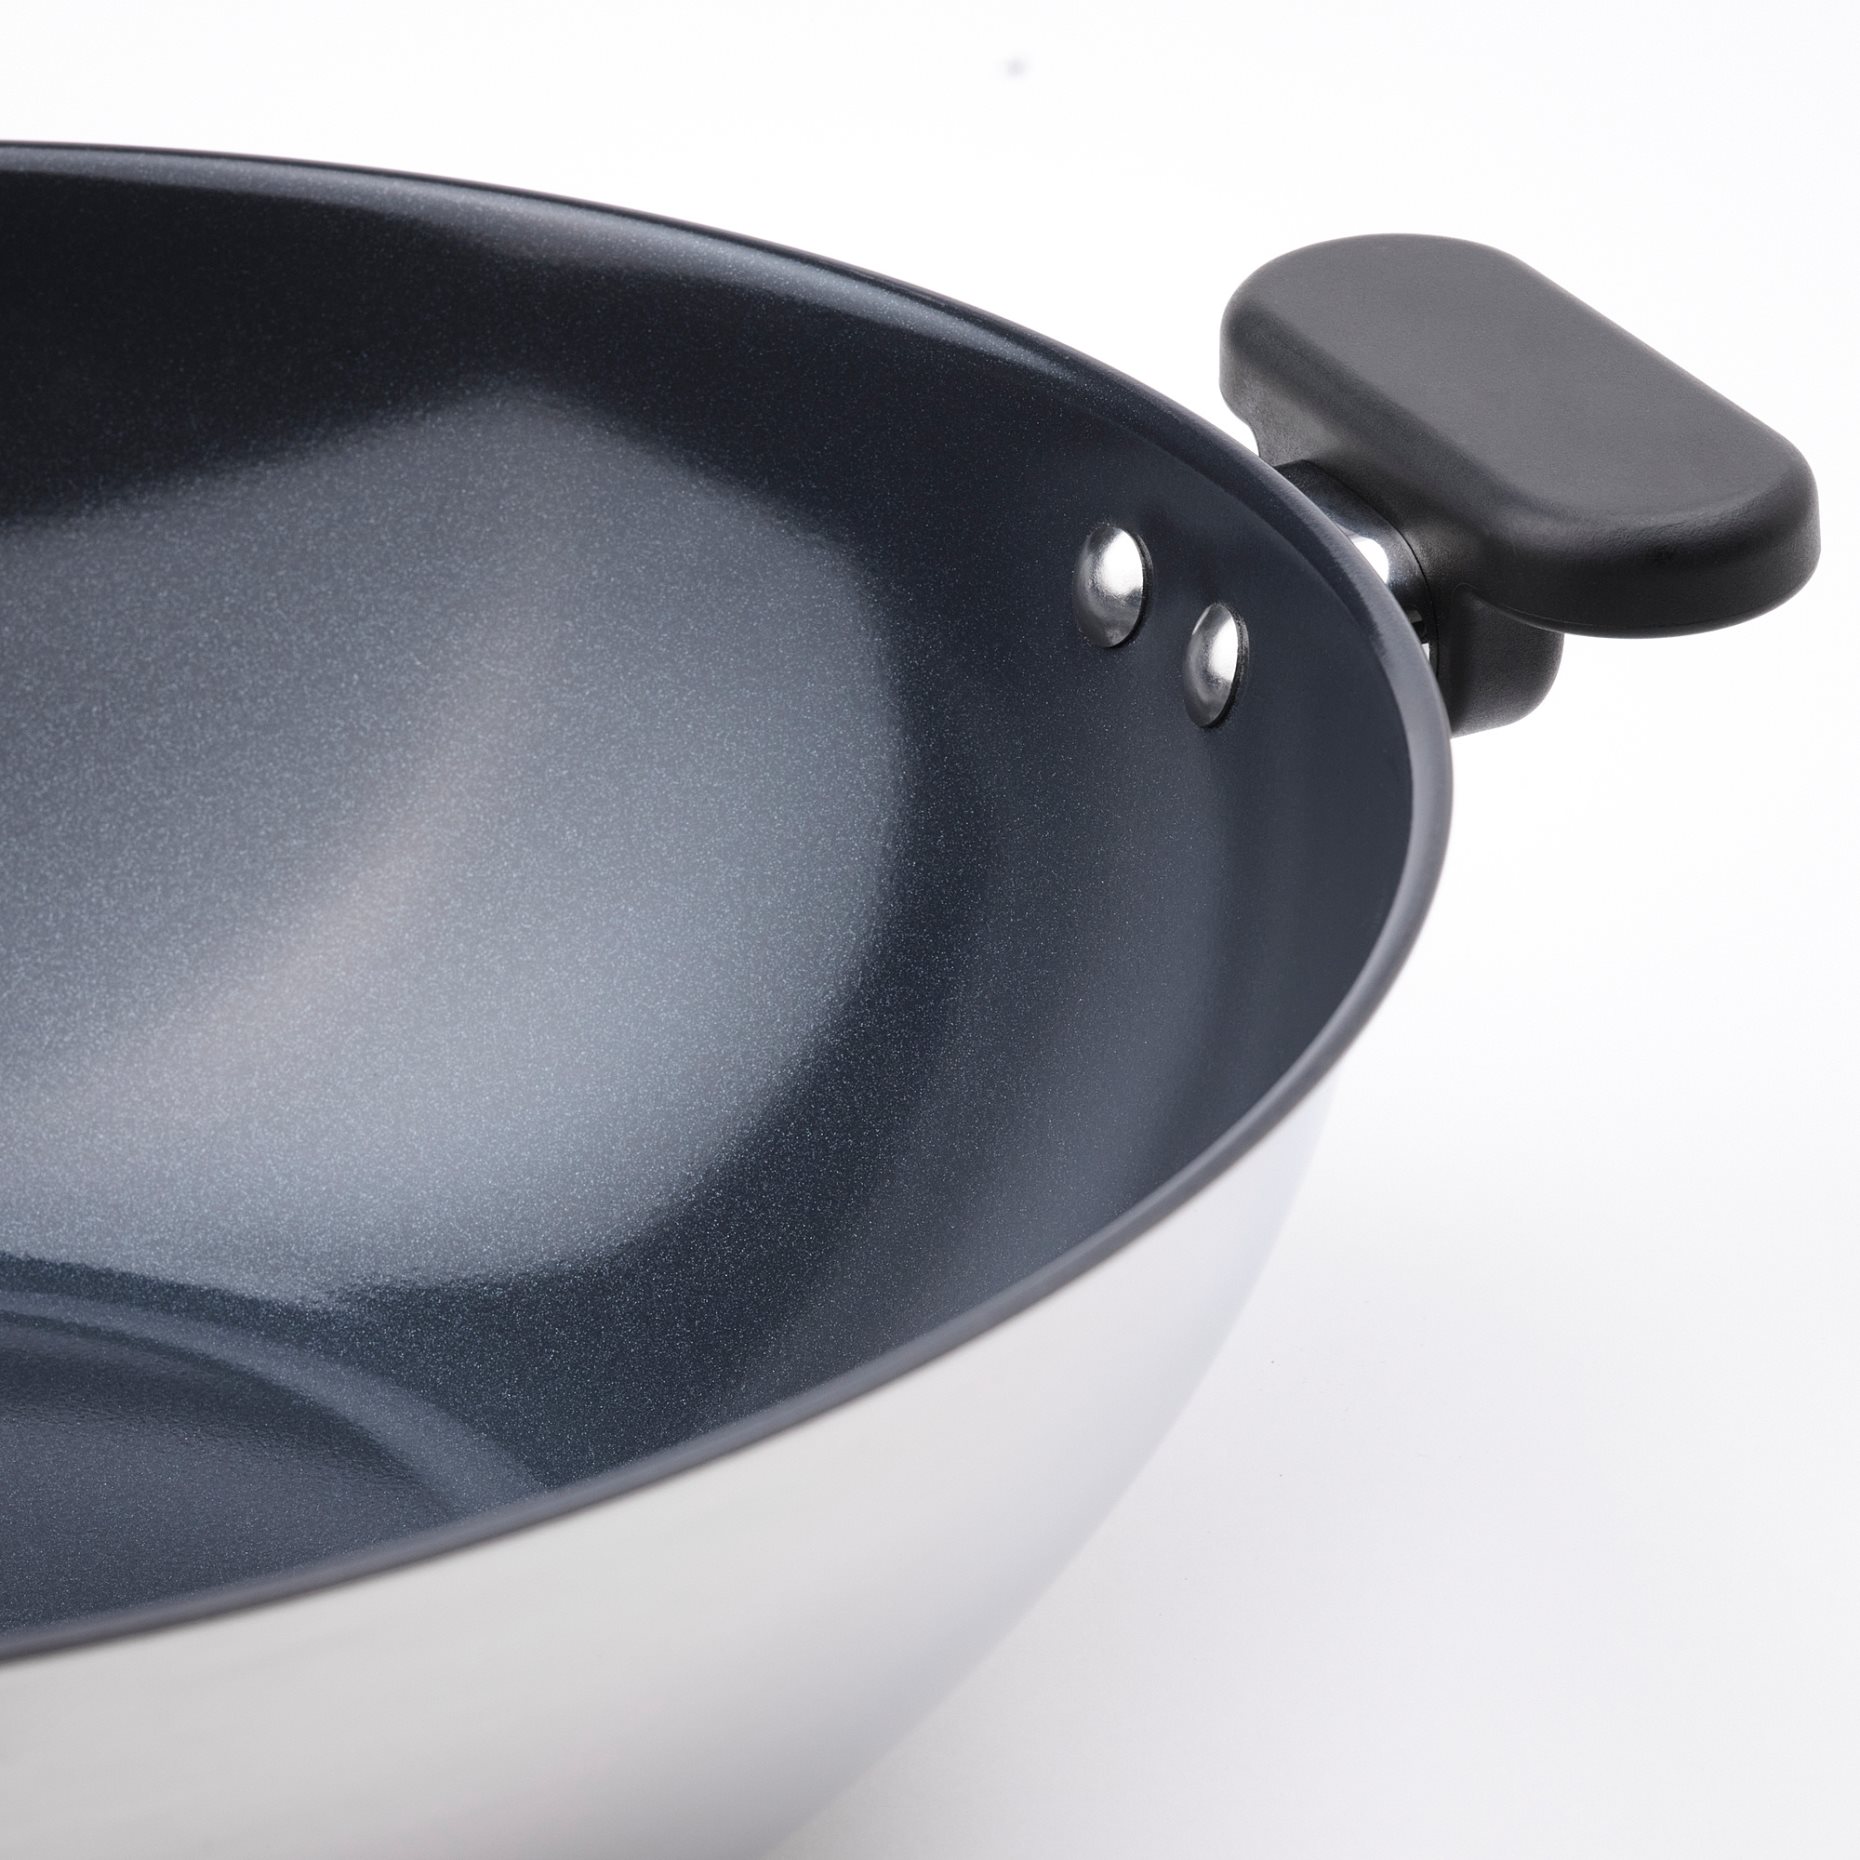 MIDDAGSMAT, wok/non-stick coating, 32 cm, 905.452.28